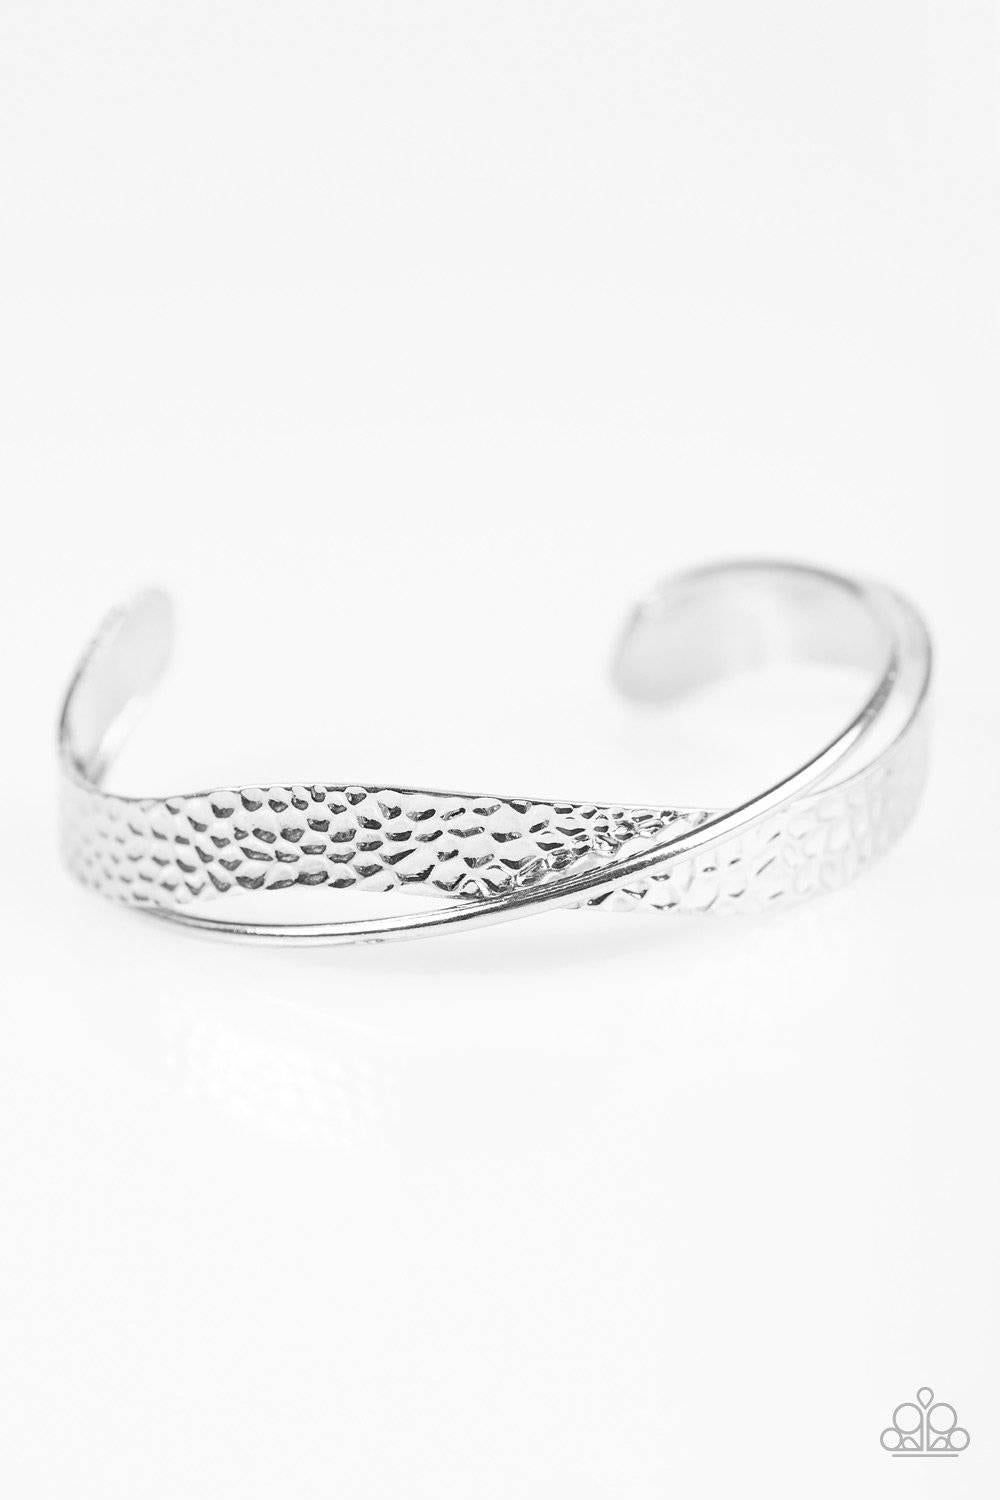 Wandering Waves - Silver Cuff Bracelet - Paparazzi Accessories - GlaMarous Titi Jewels